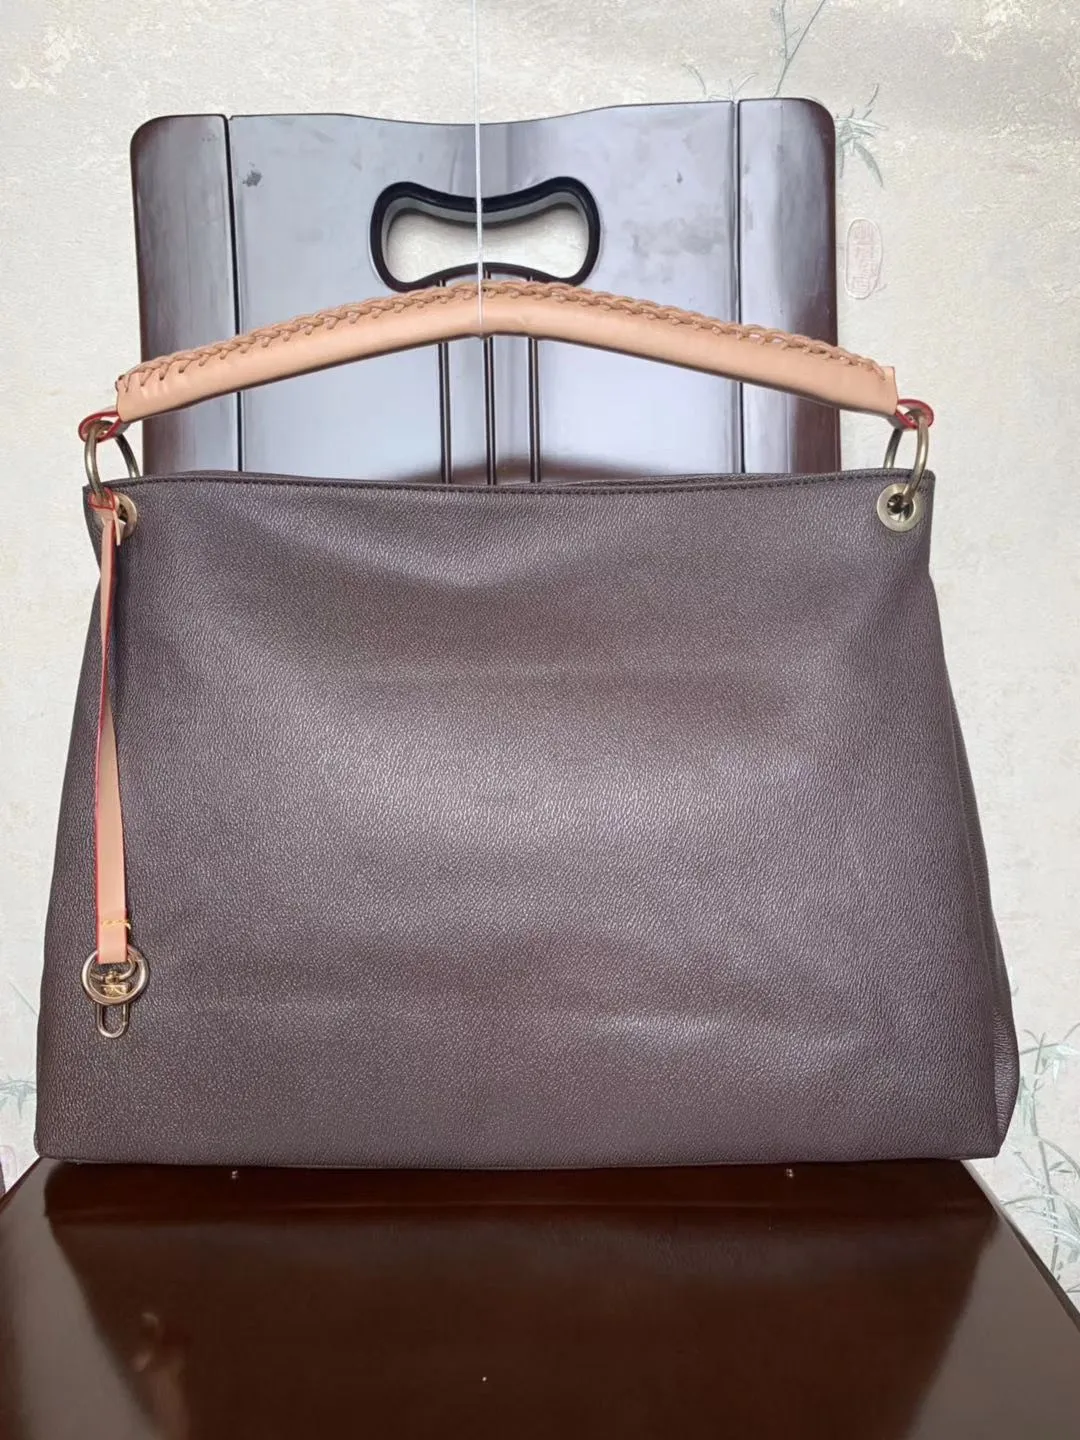 Designer' Luxury Bags for Women and Men